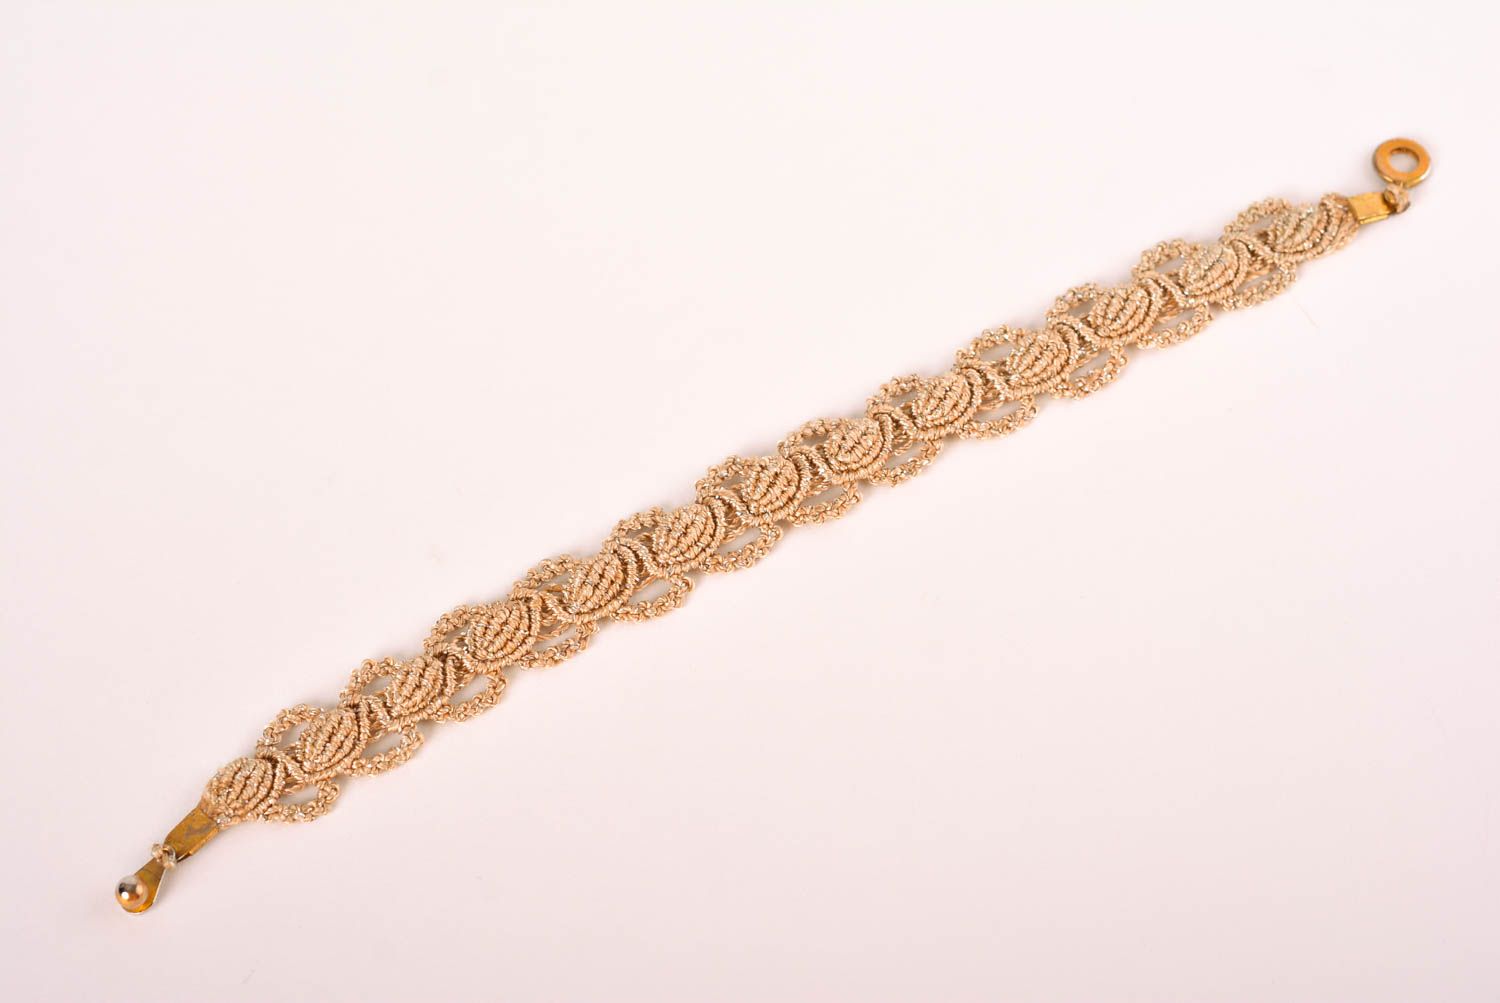 Stylish handmade macrame bracelet woven thread bracelet textile jewelry designs photo 5